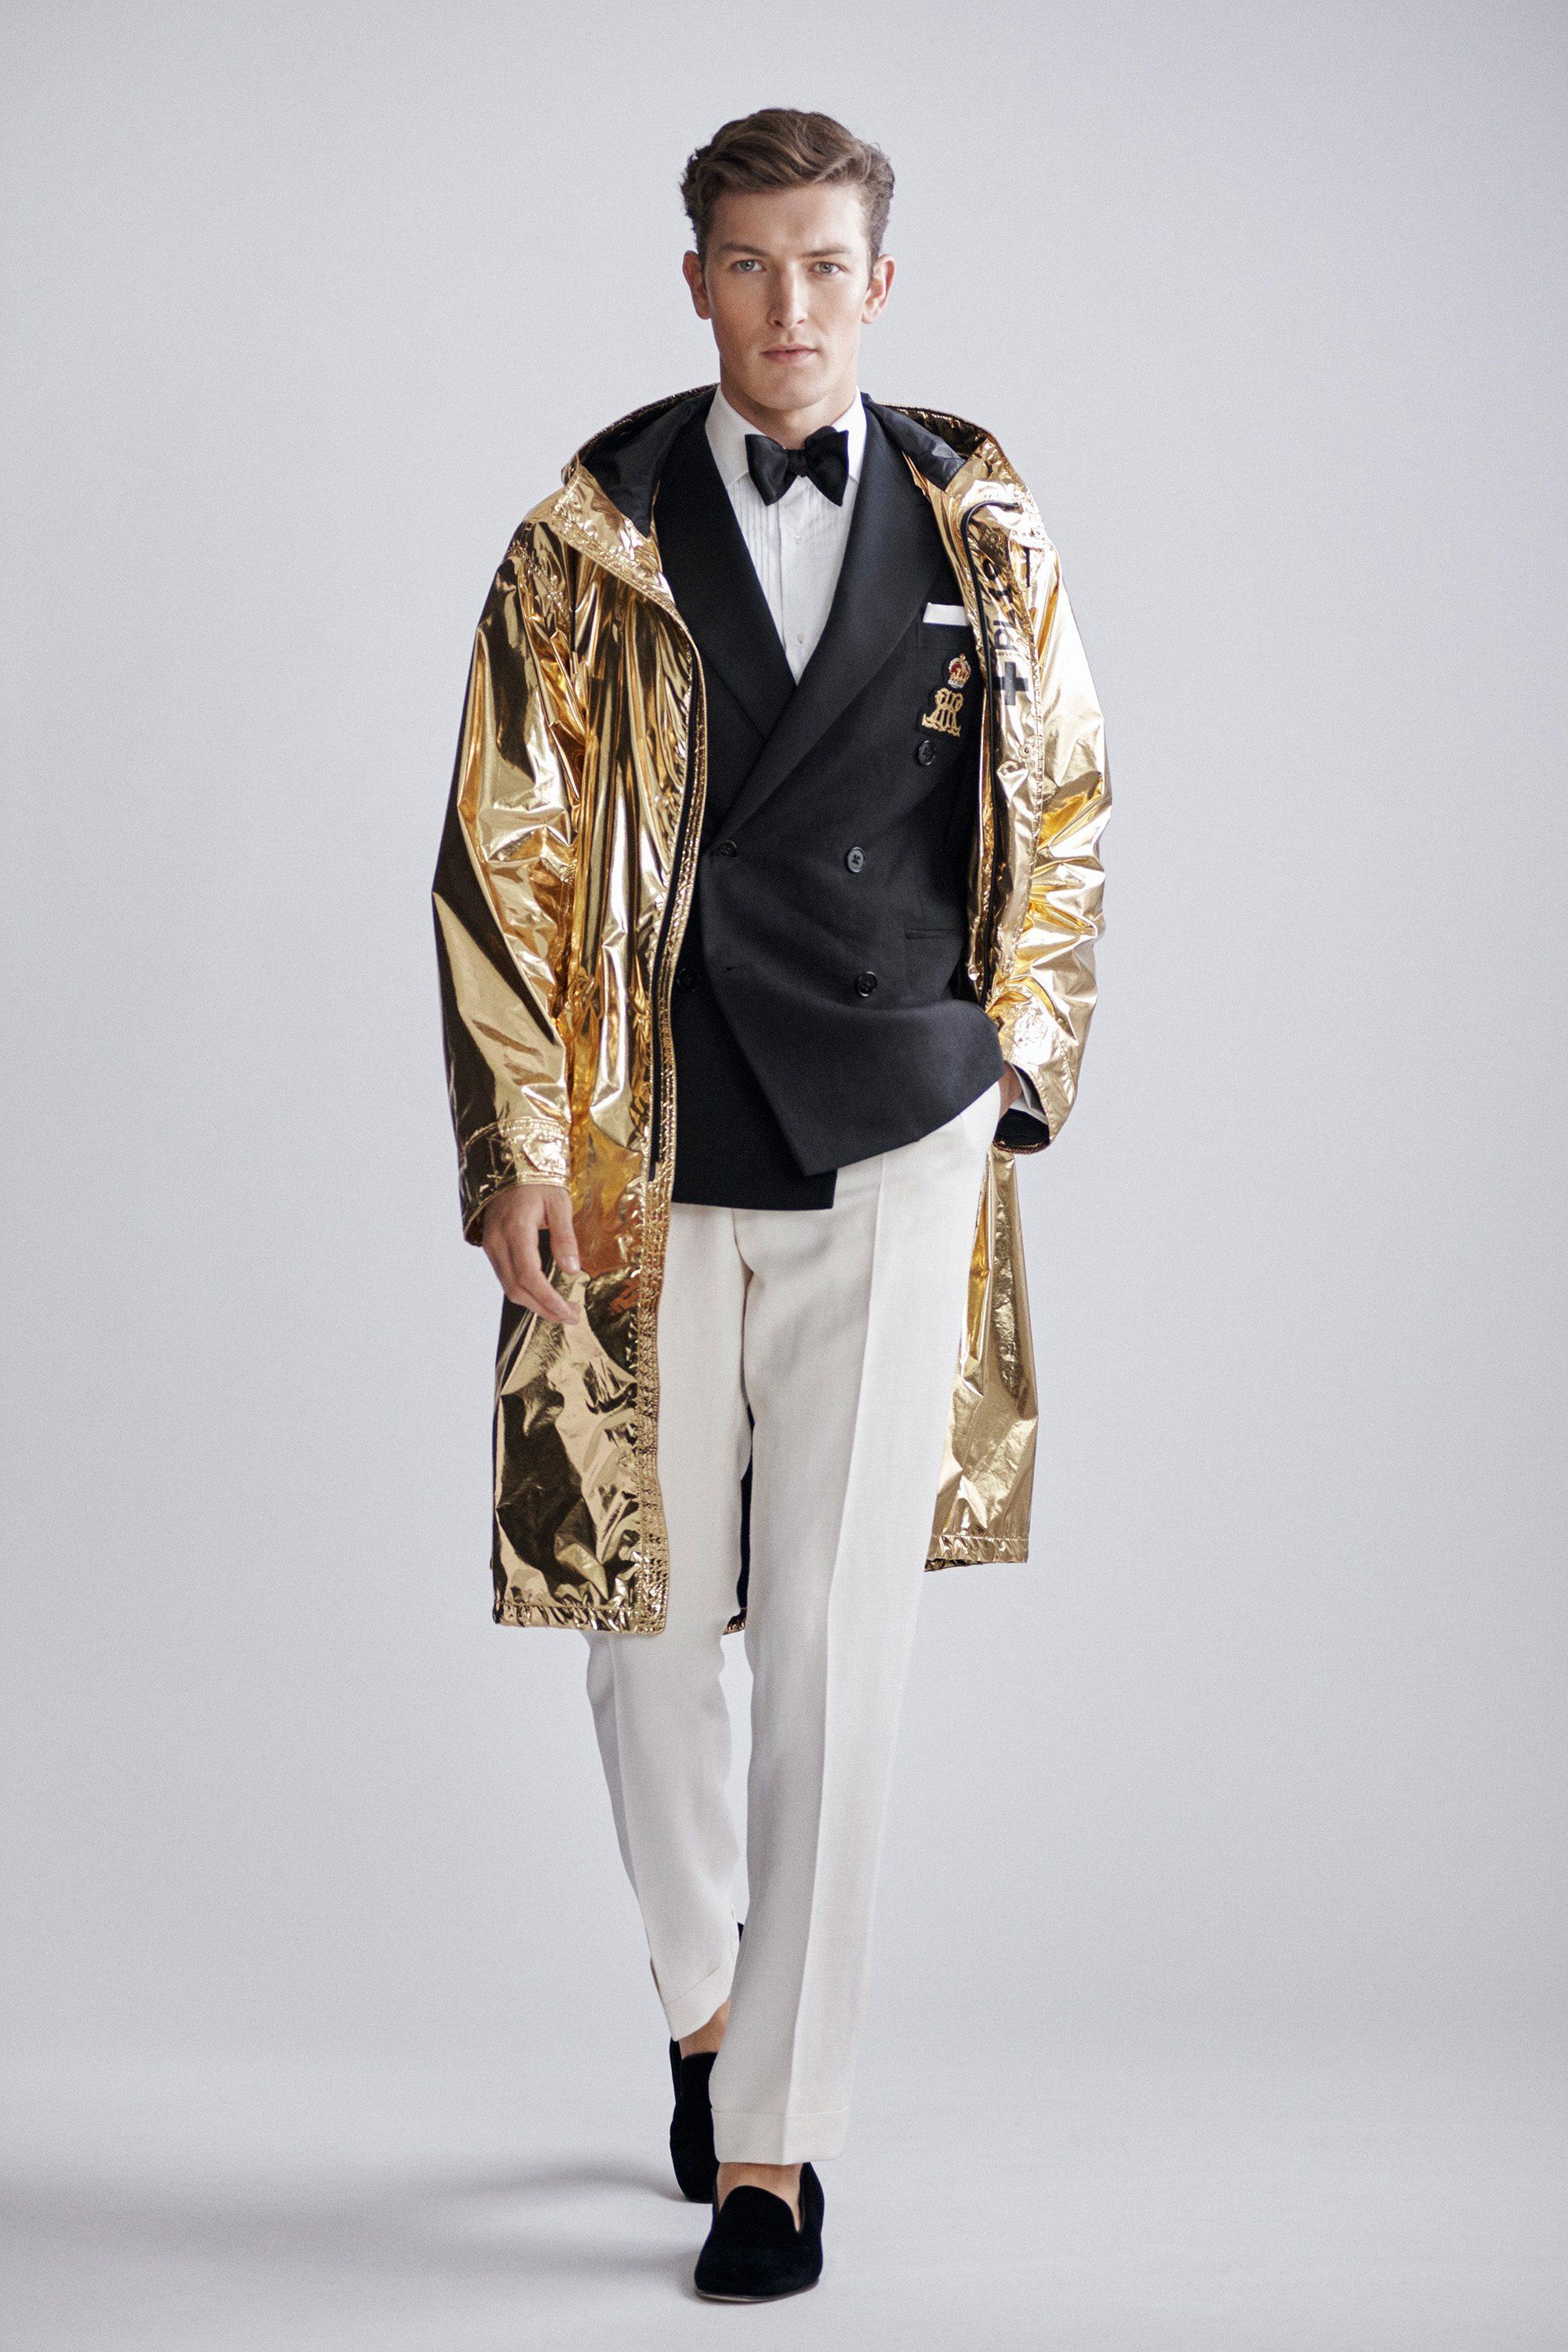 A gold jacket from Ralph Lauren's Spring